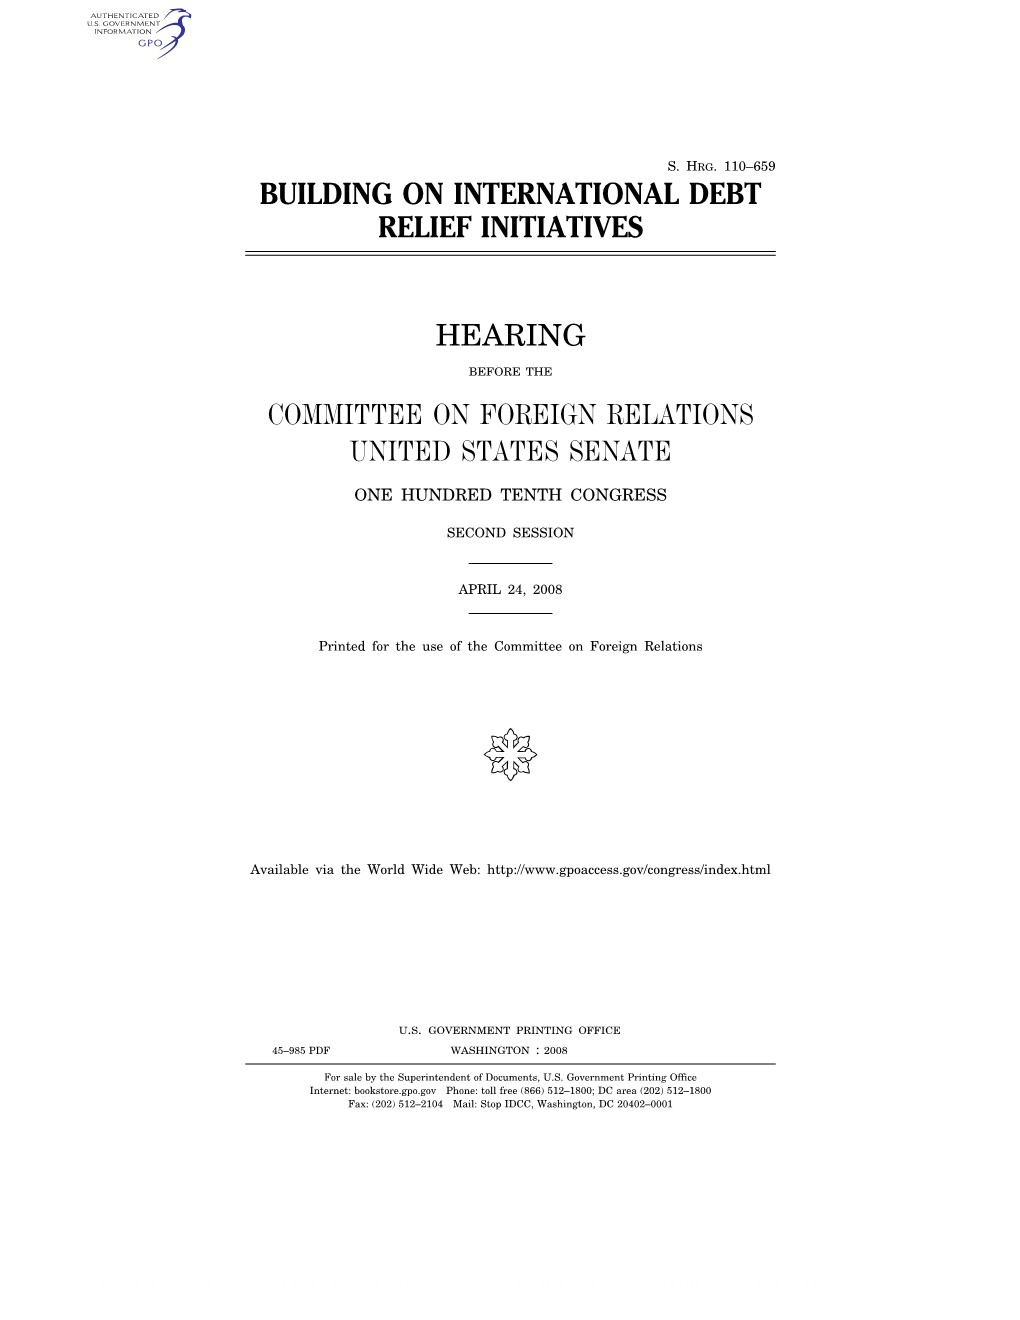 Building on International Debt Relief Initiatives